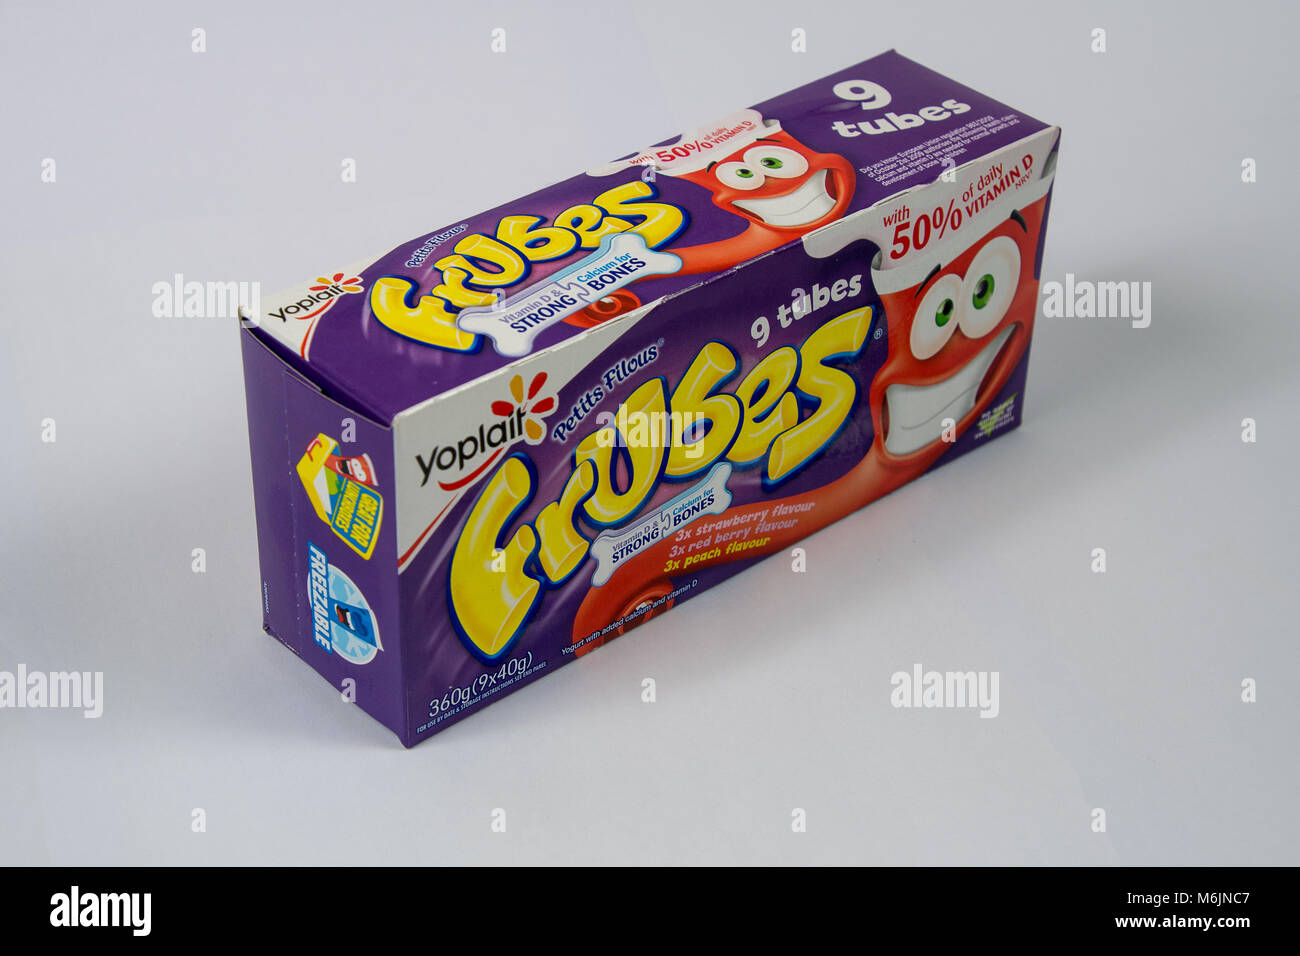 CHESTER, UK - MARCH 4TH 2018: Box of Yoplait Frubes Petits Filous yoghurt Stock Photo